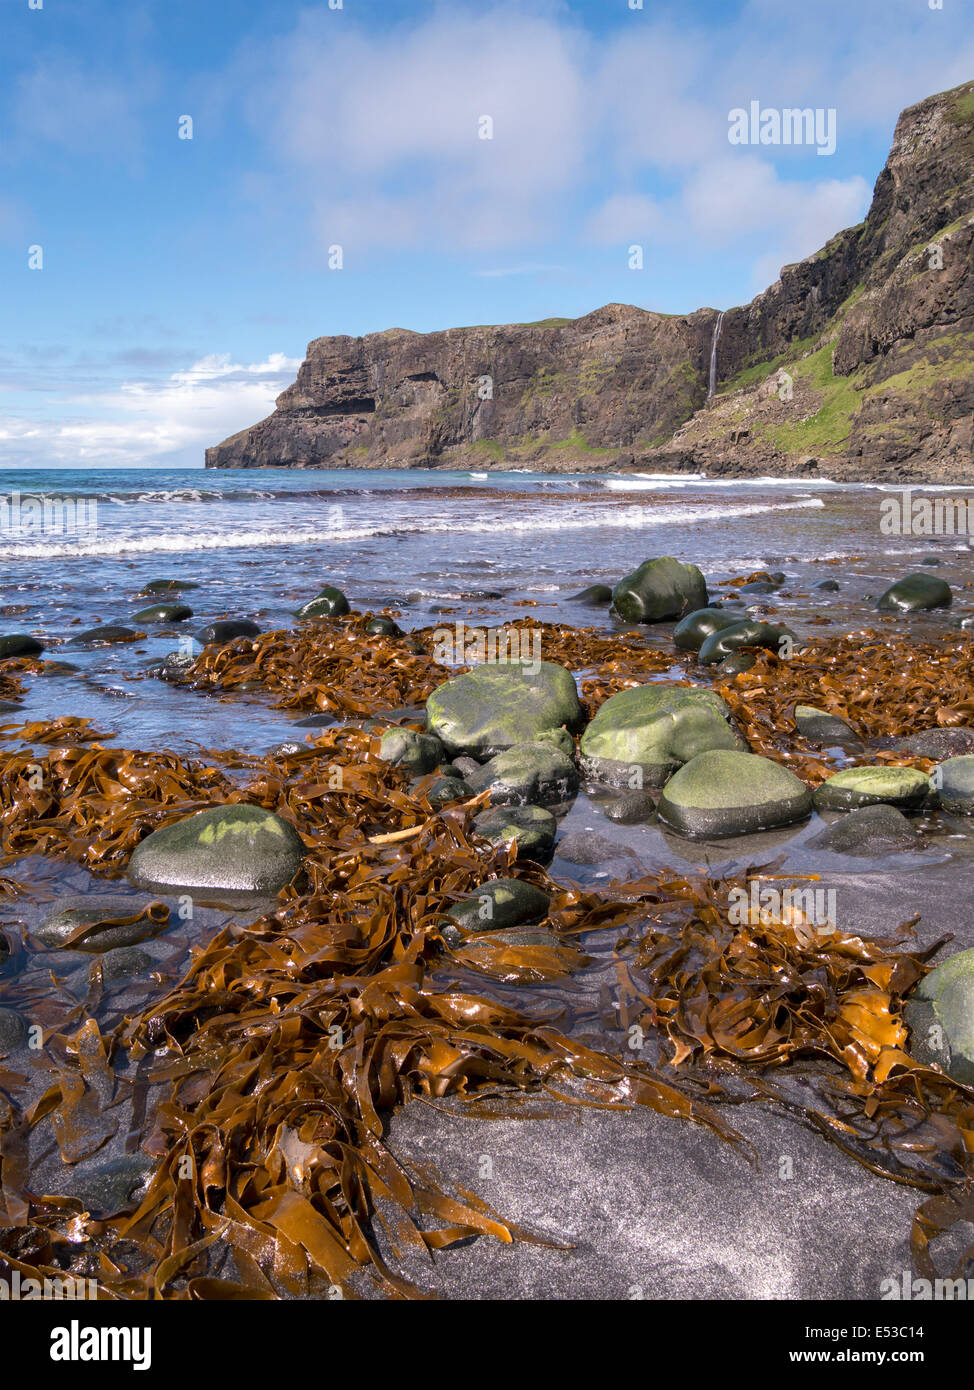 Seaweed, sand and pebbles on beach at Talisker Bay, Isle of Skye, Scotland, UK Stock Photo